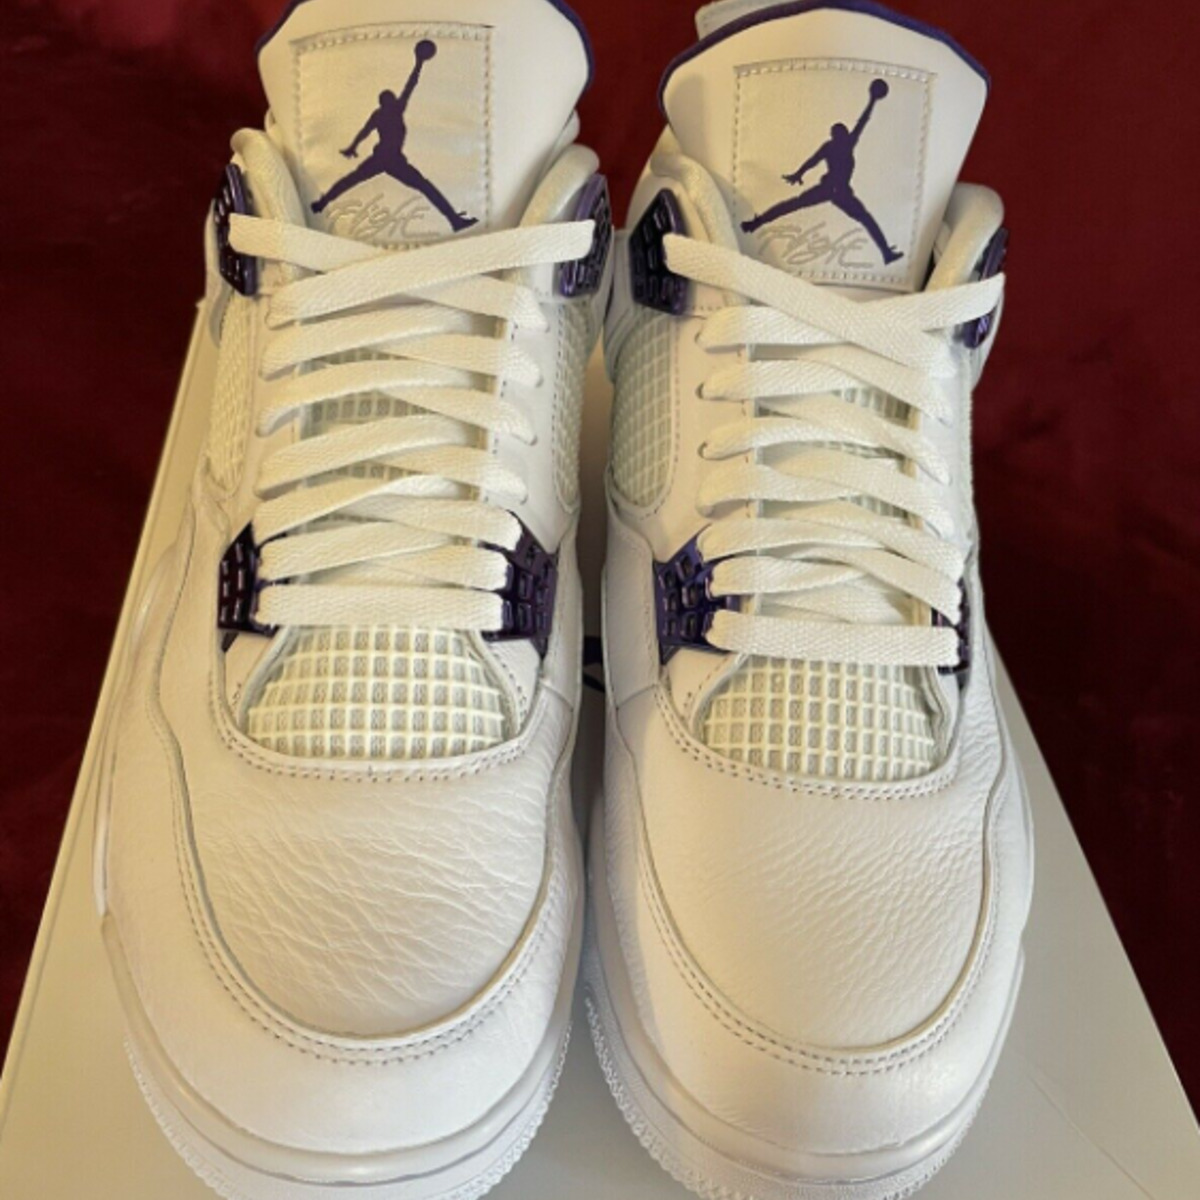 Chaussures Homme Nike Air Jordan 1 Retro High Reverse Shattered Backboard 26.5cm Air Jordan 4 Violet